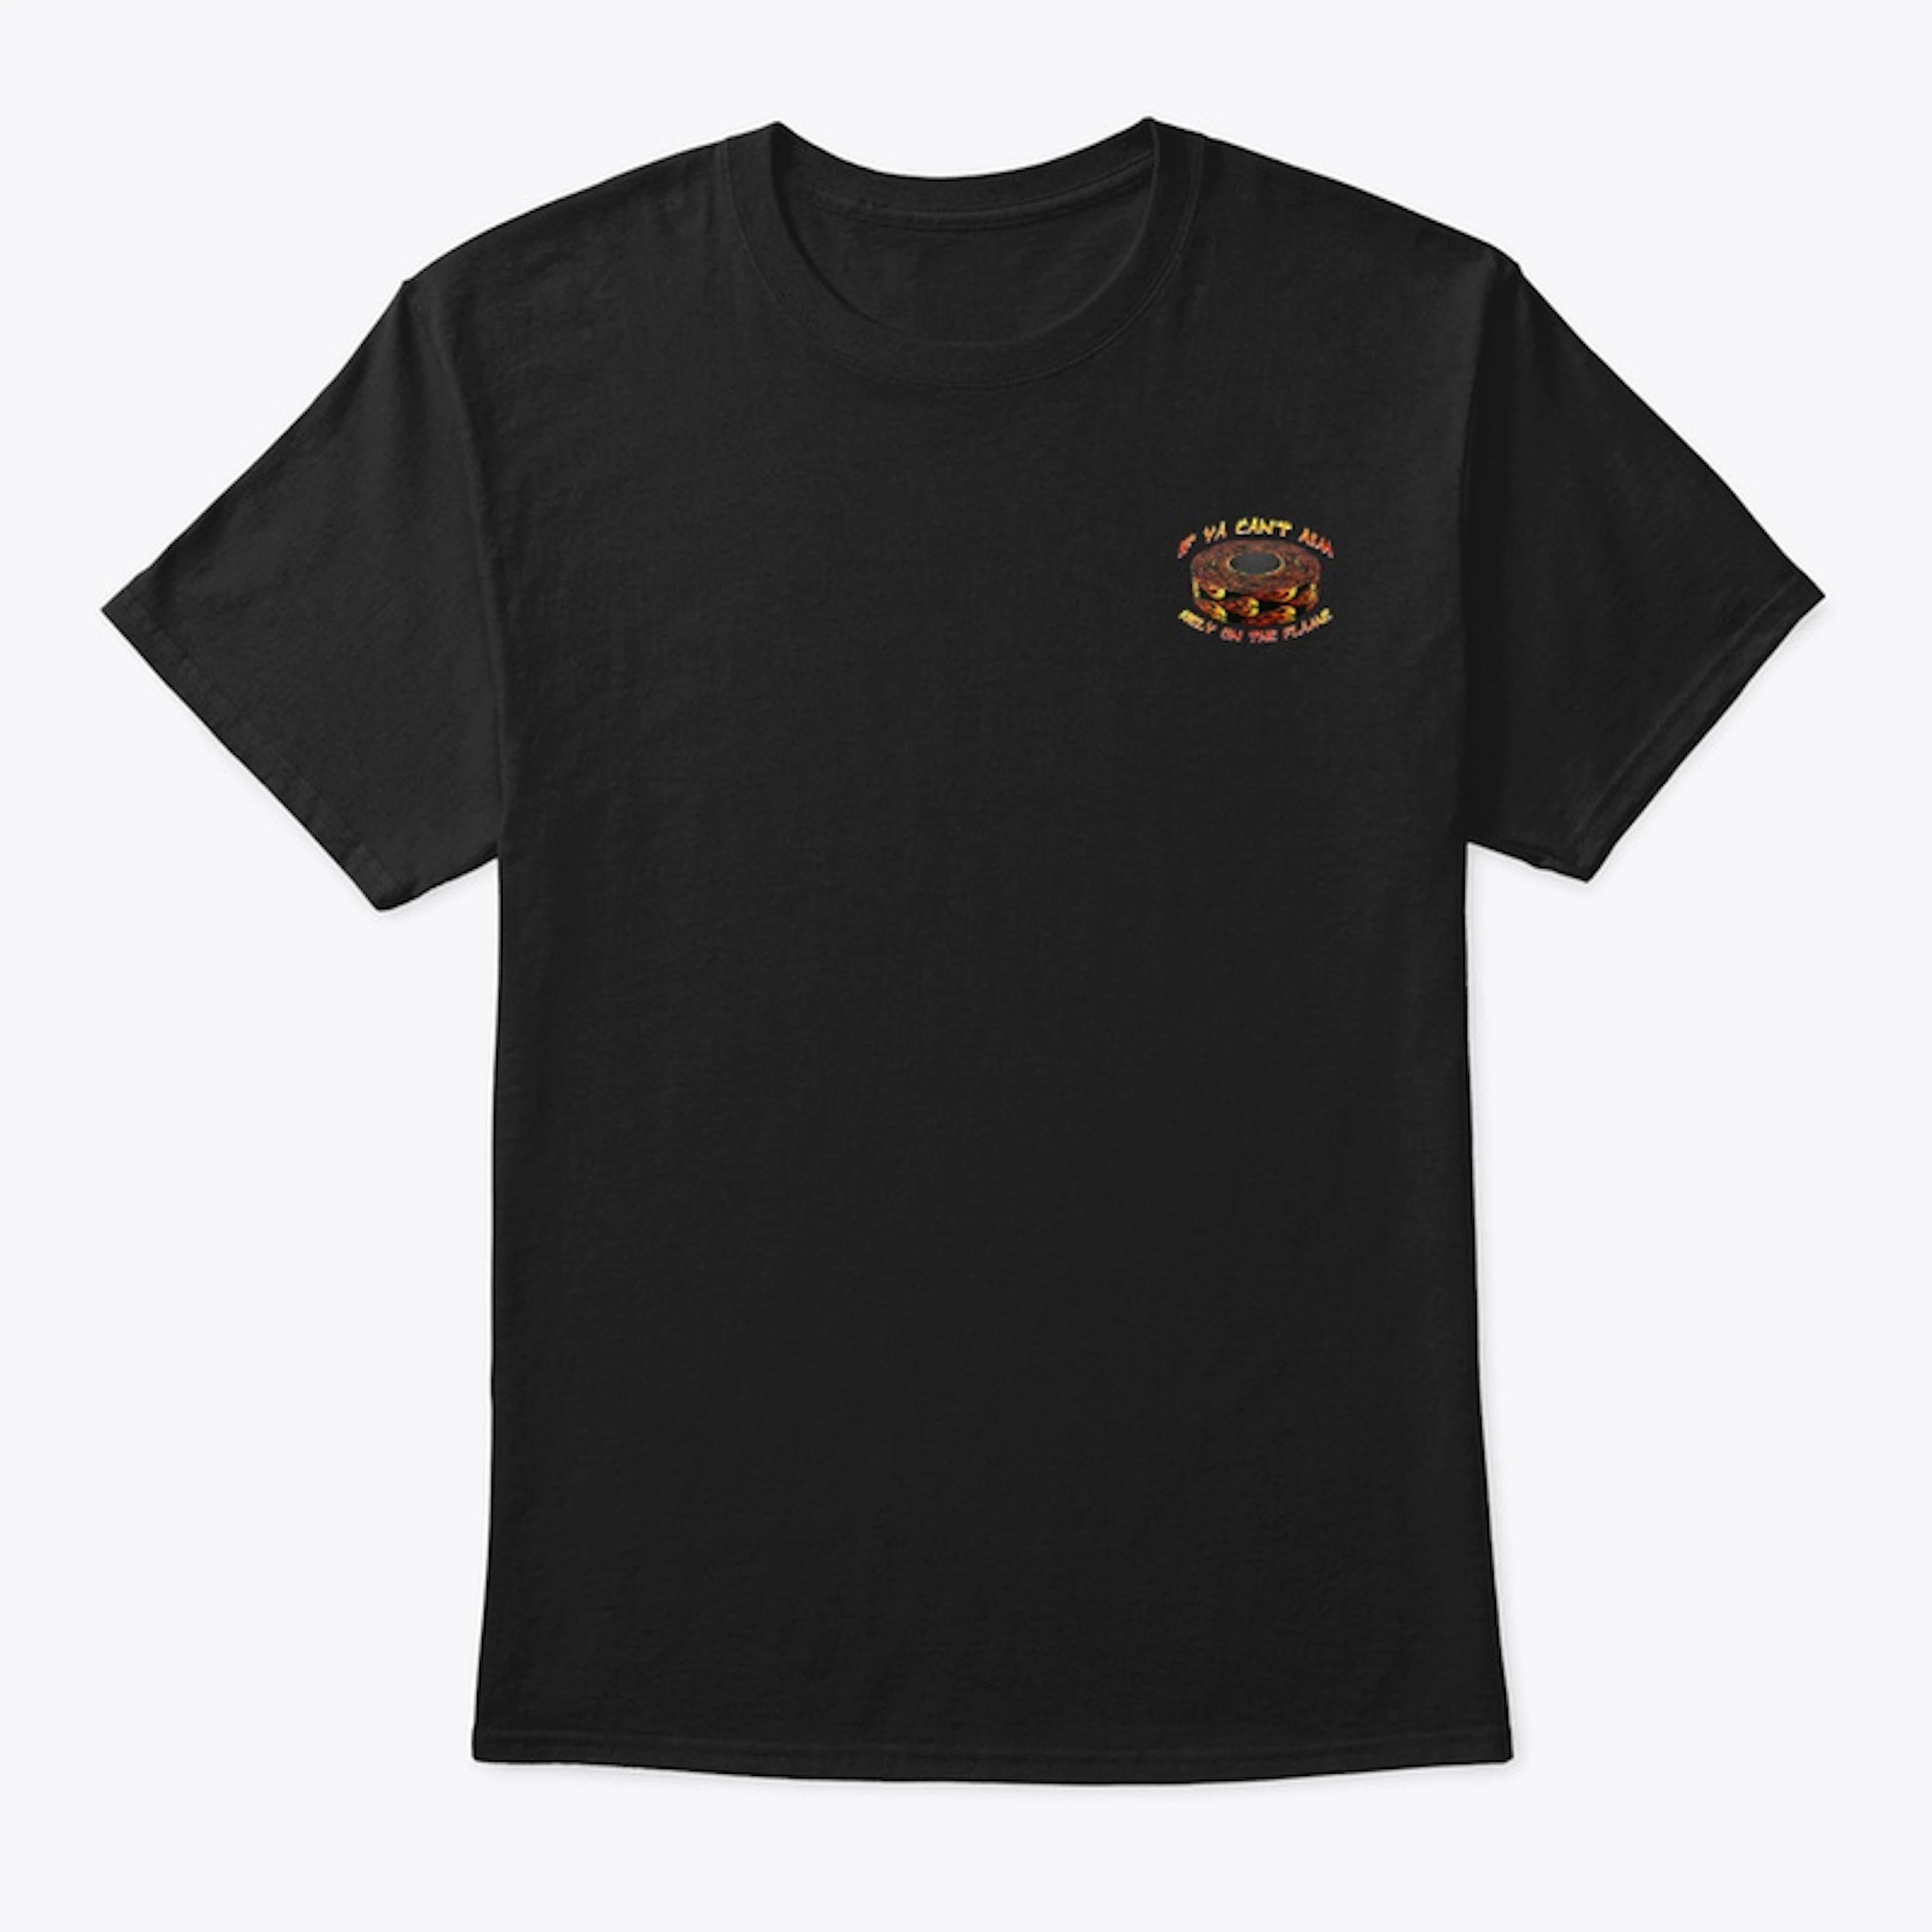 "Black" Flame Tape Shirt